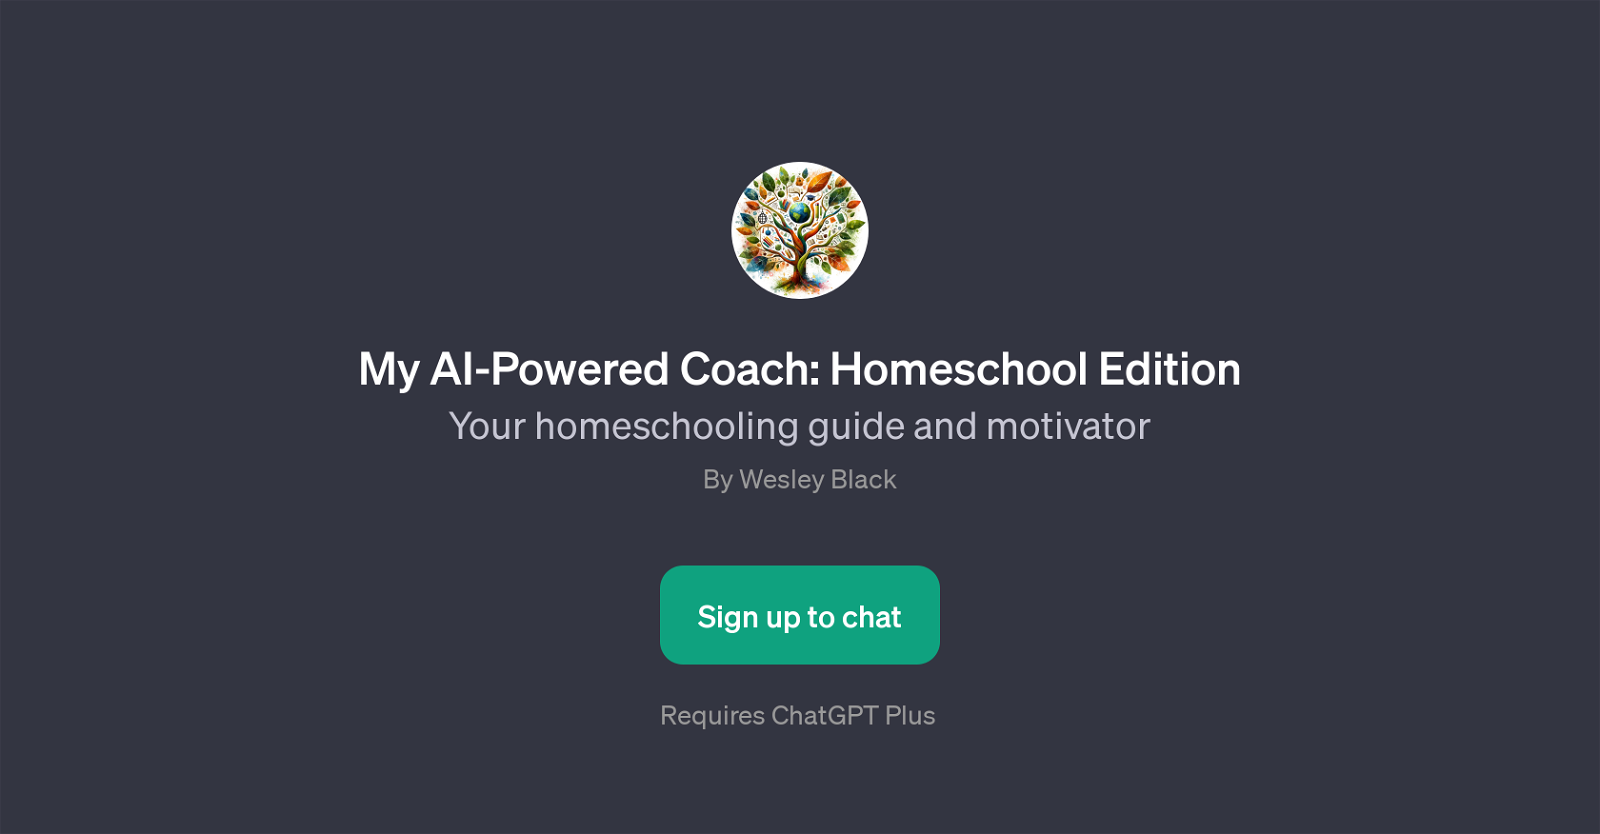 My AI-Powered Coach: Homeschool Edition website